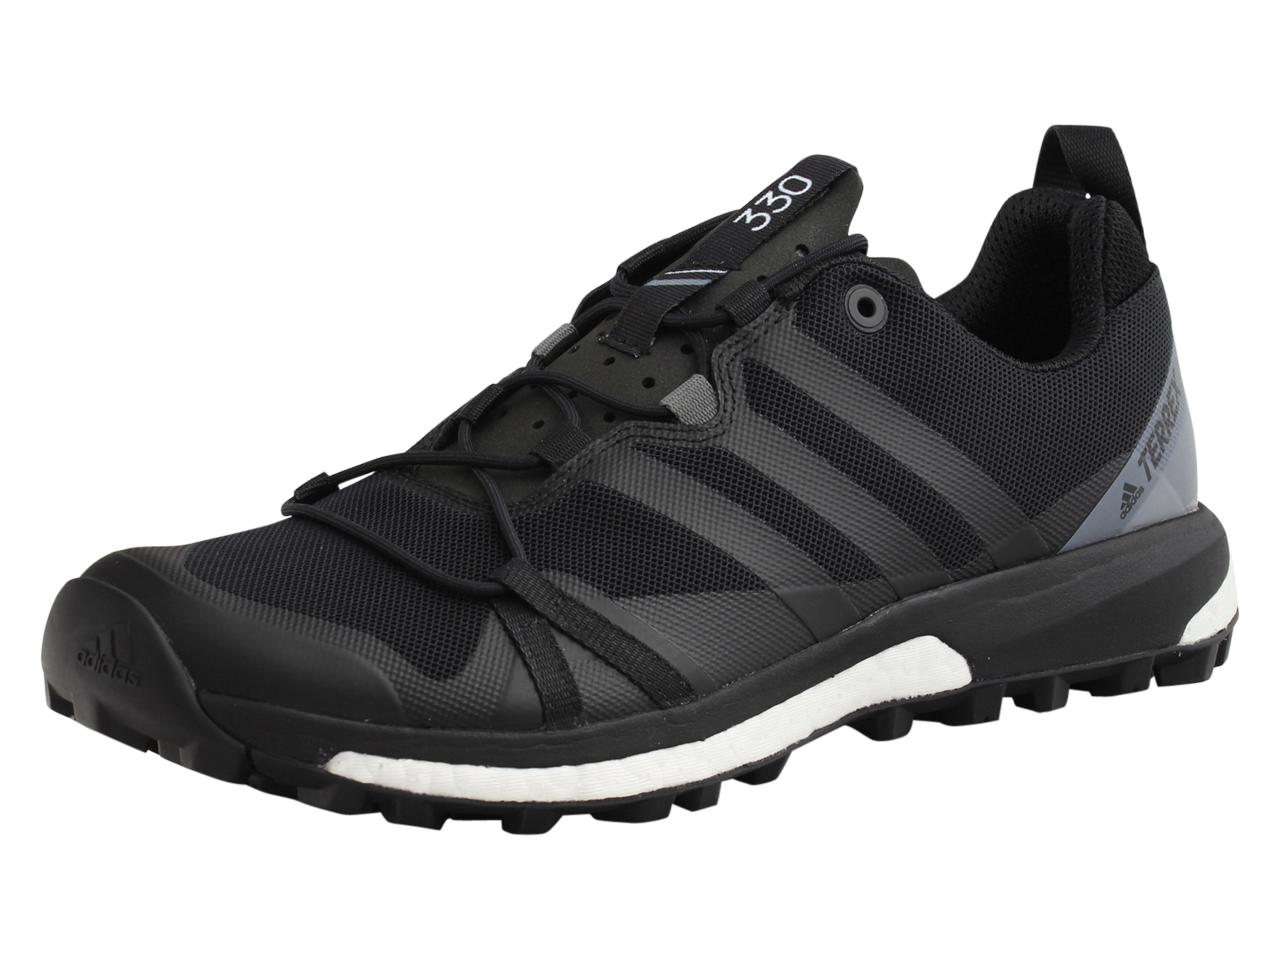 Adidas Men's Terrex Agravic All Terrain Trail Running Sneakers Shoes - Black - 10 D(M) US